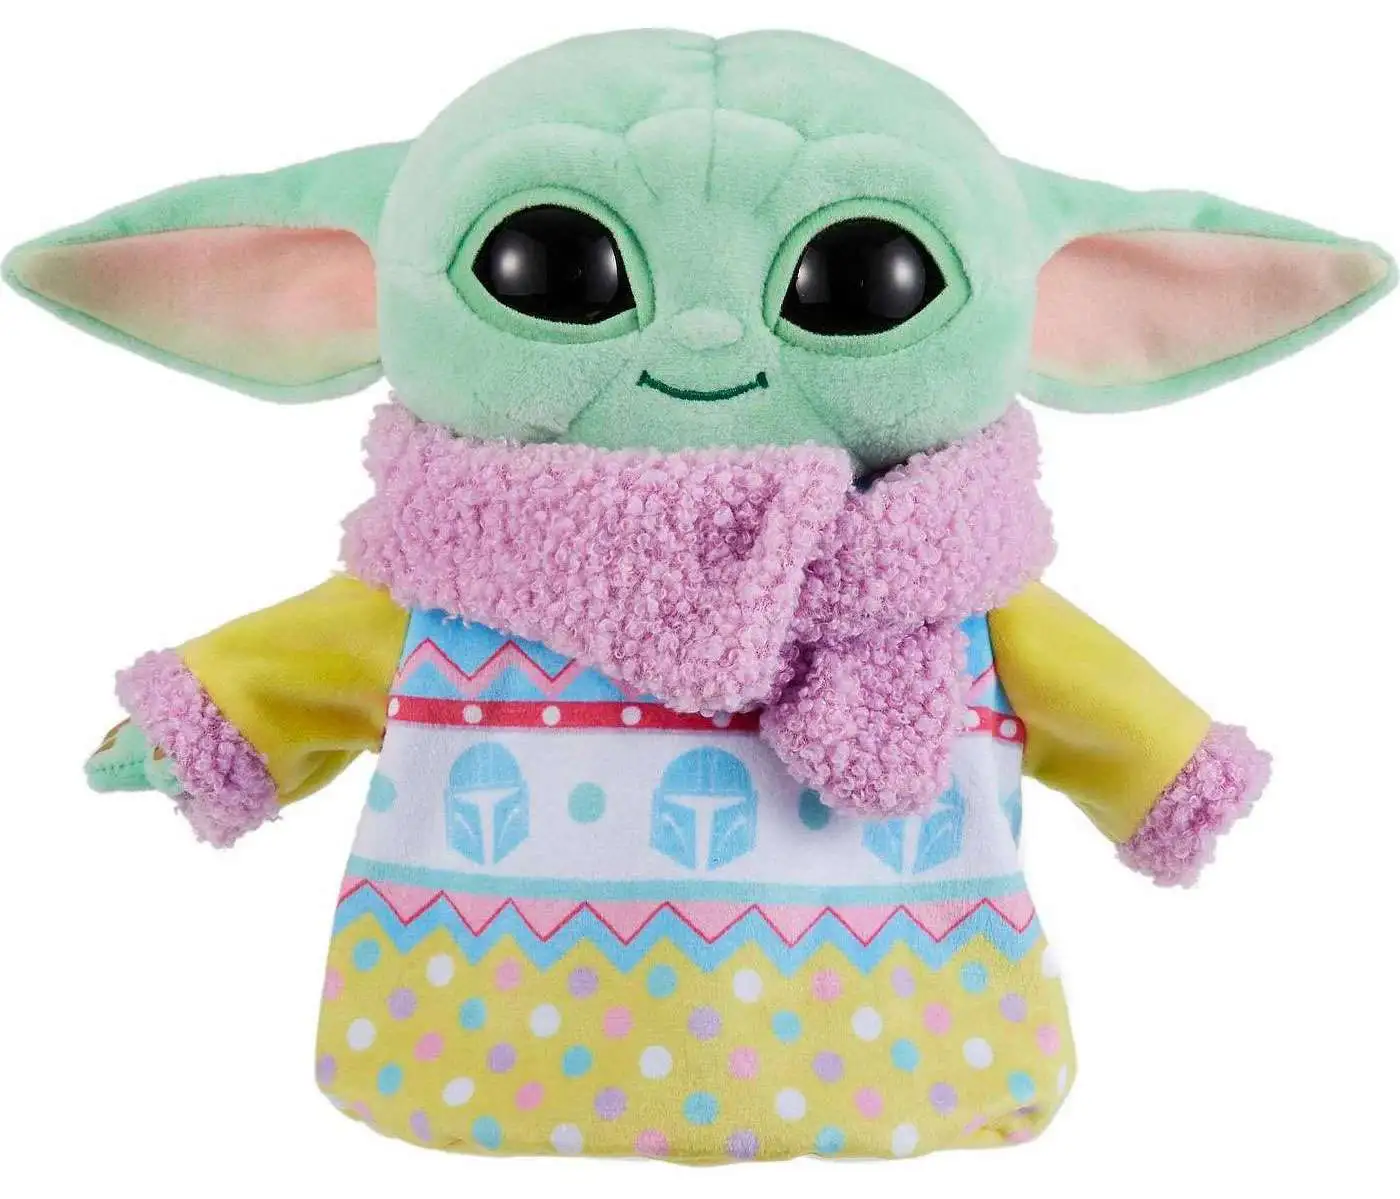 Star Wars Mandalorian The Child BABY YODA  8" Plush Doll Mattel Toy Gift New 